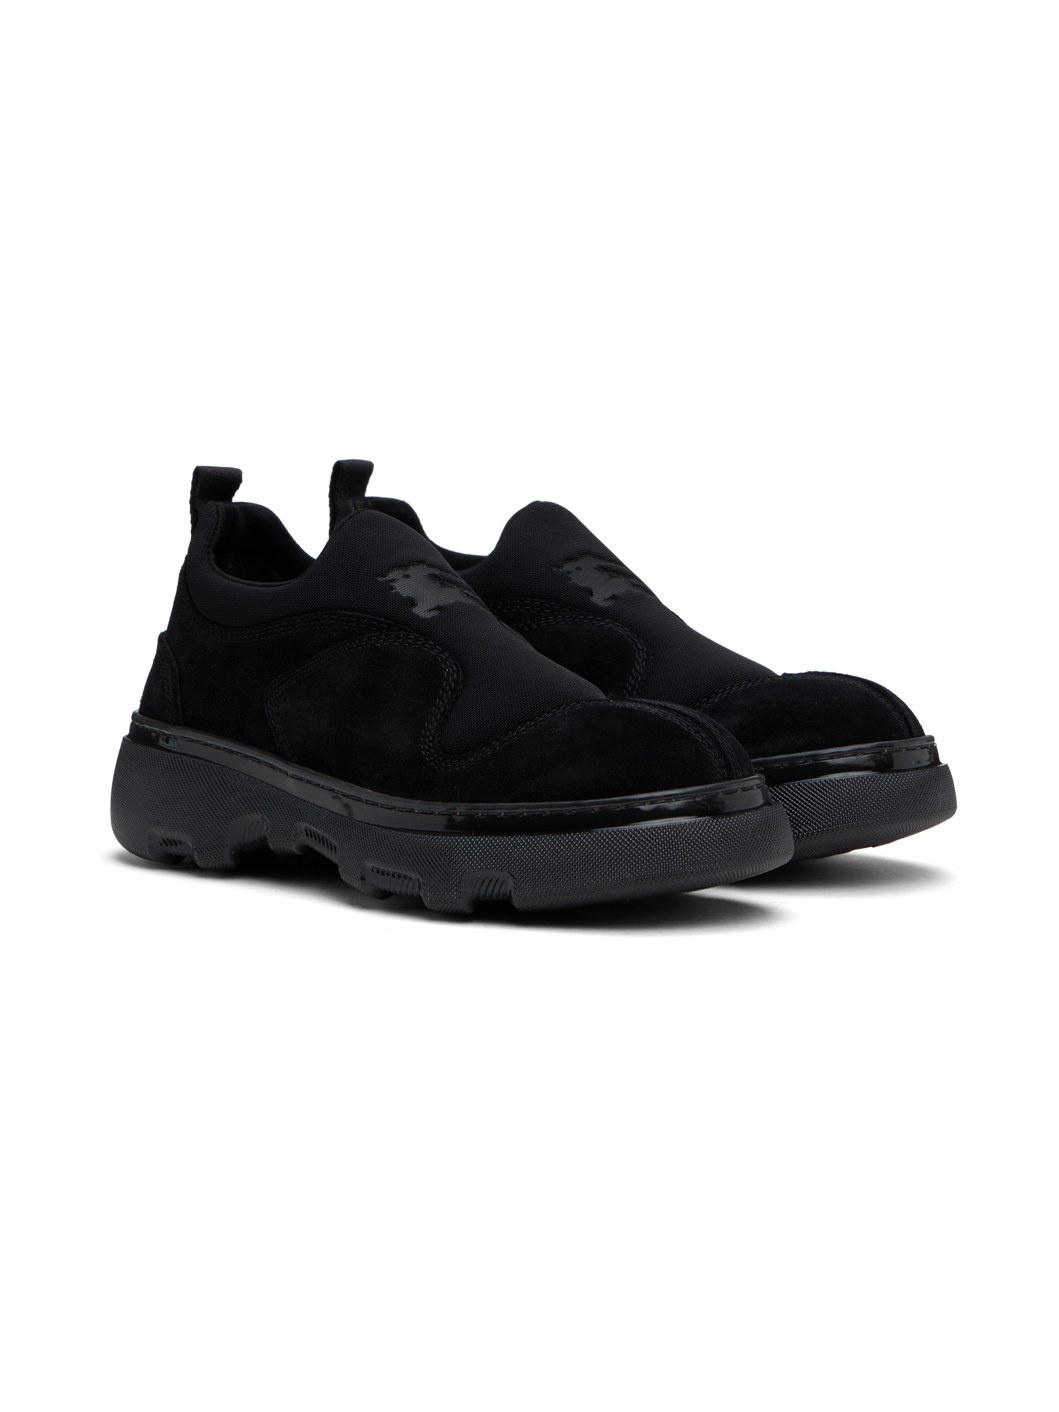 Black Suede Foam Sneakers - 4